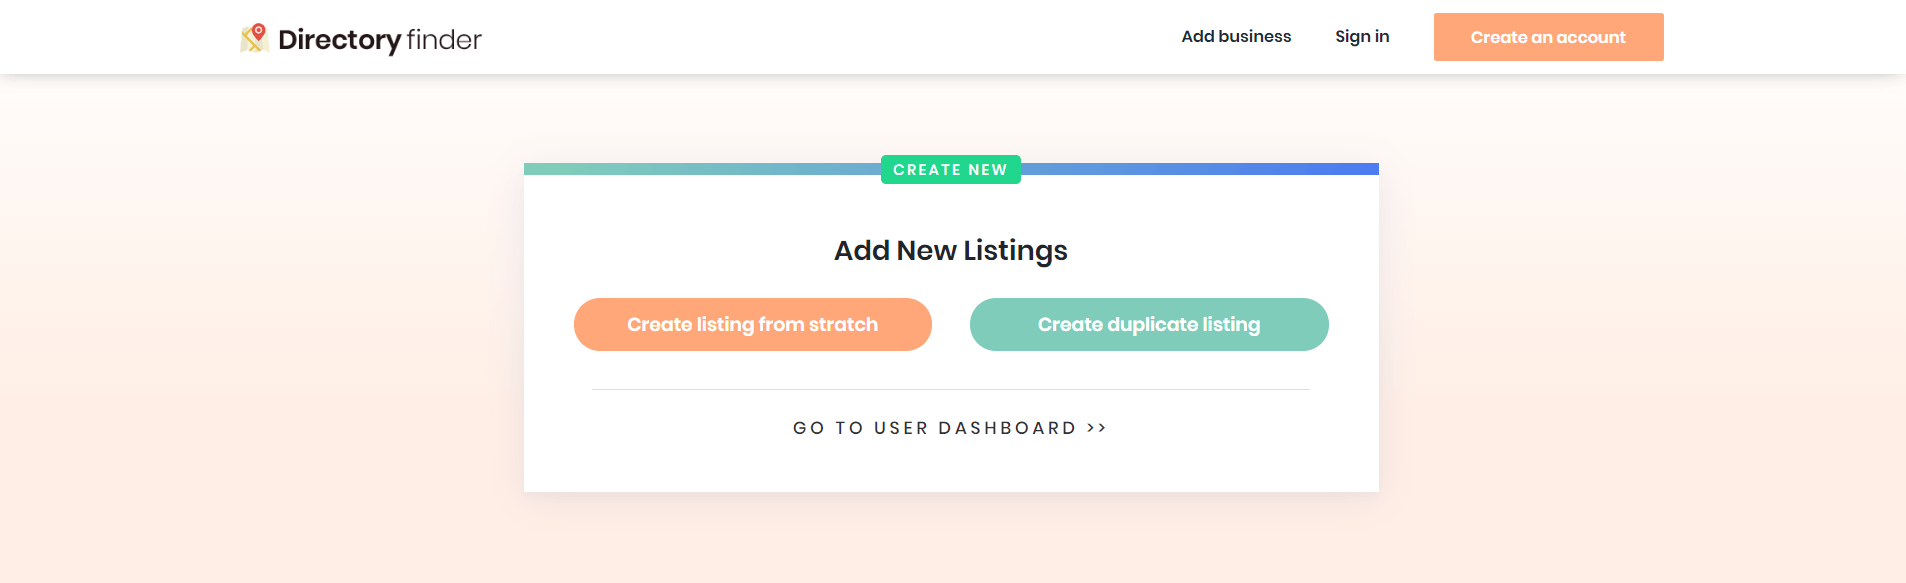 Create duplicate listing